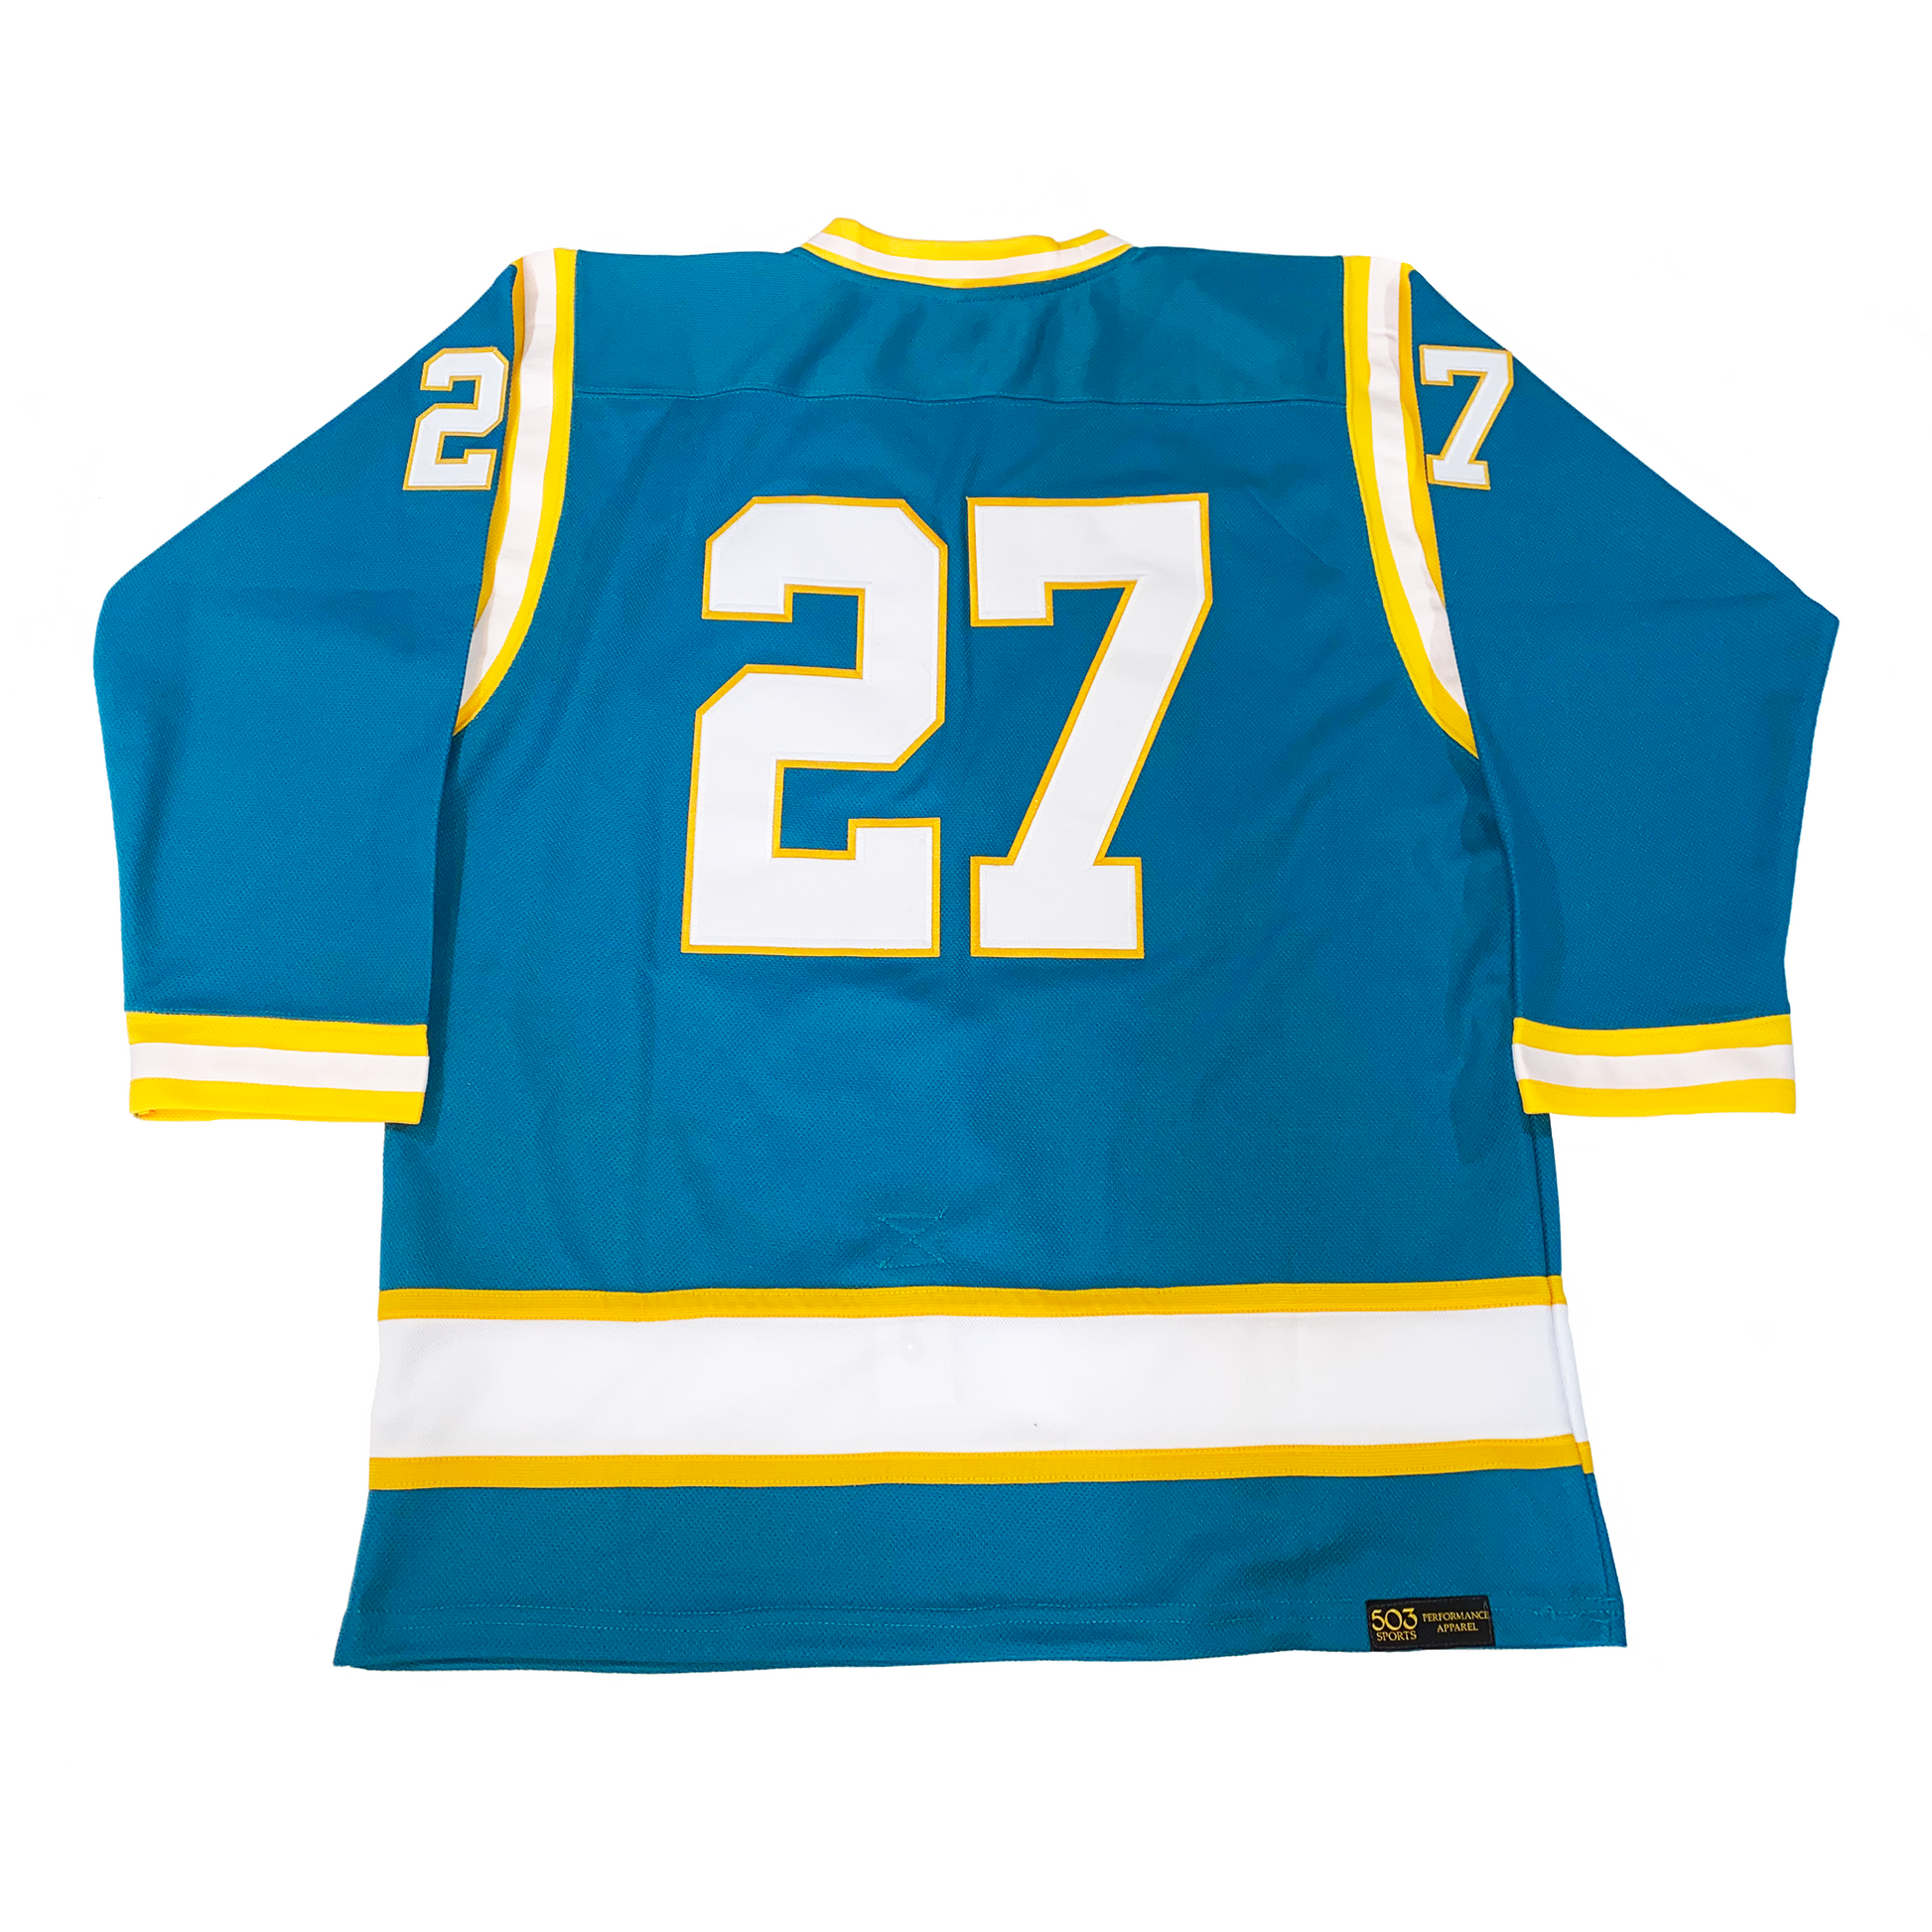 California Golden Seals Road Uniform - National Hockey League (NHL